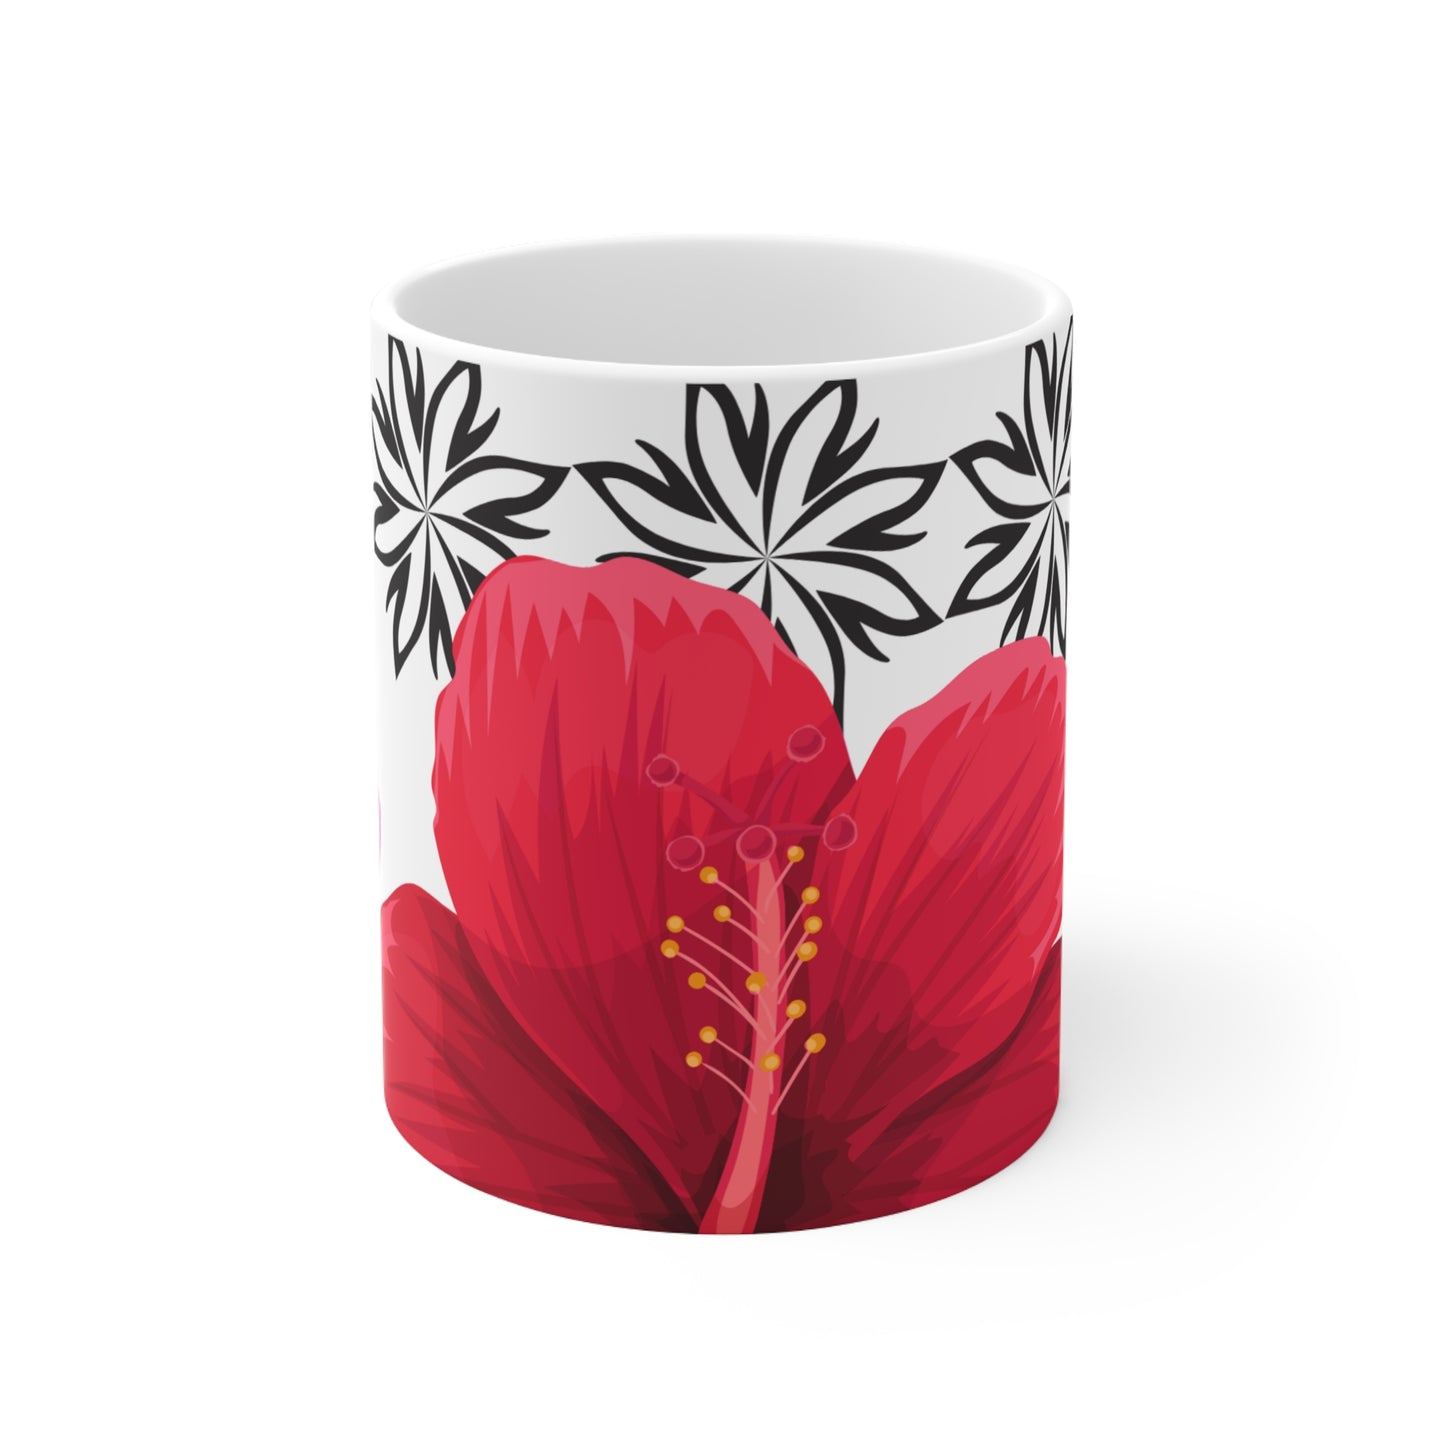 The Ultimate Ceramic Mug 11oz - Floral Design